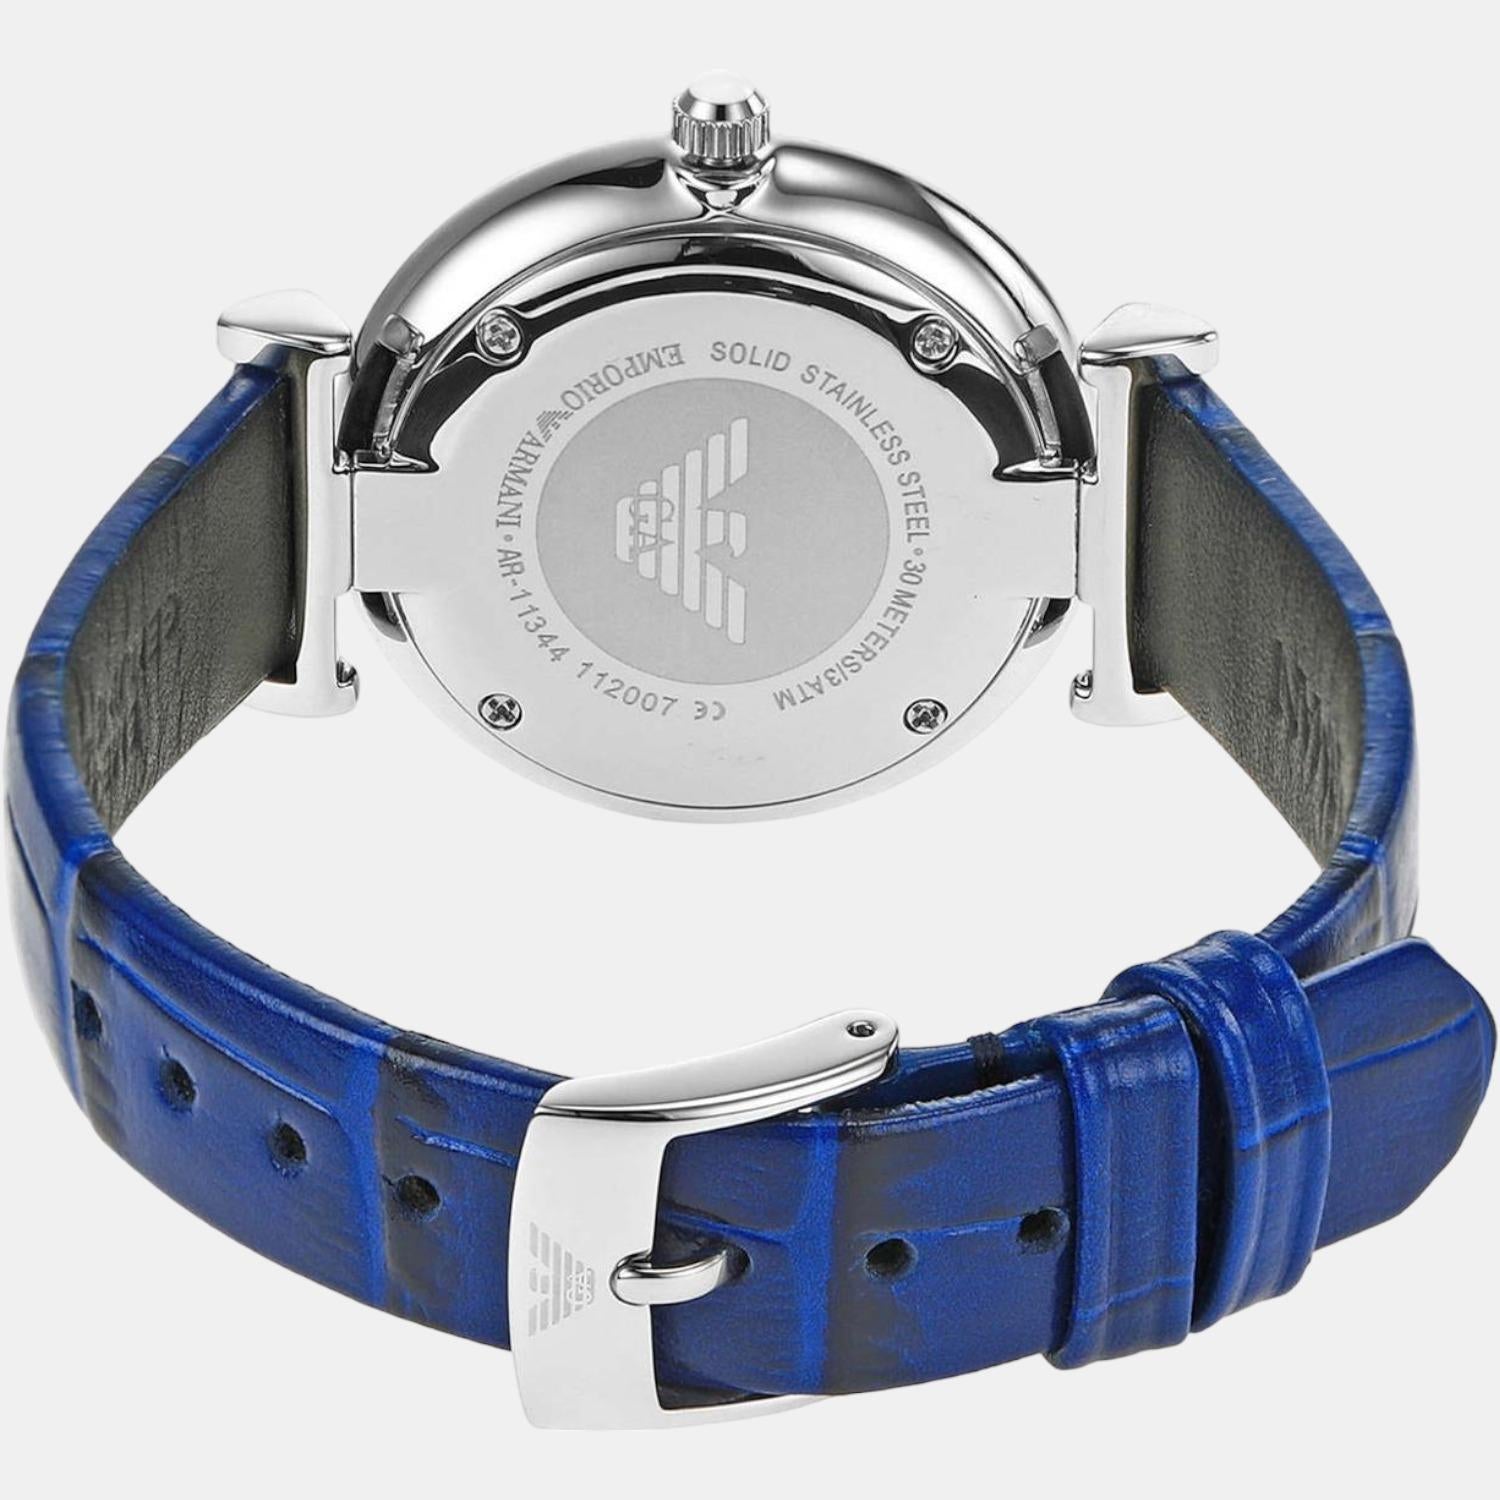 Emporio Armani Female Analog Leather Watch | Emporio Armani – Just